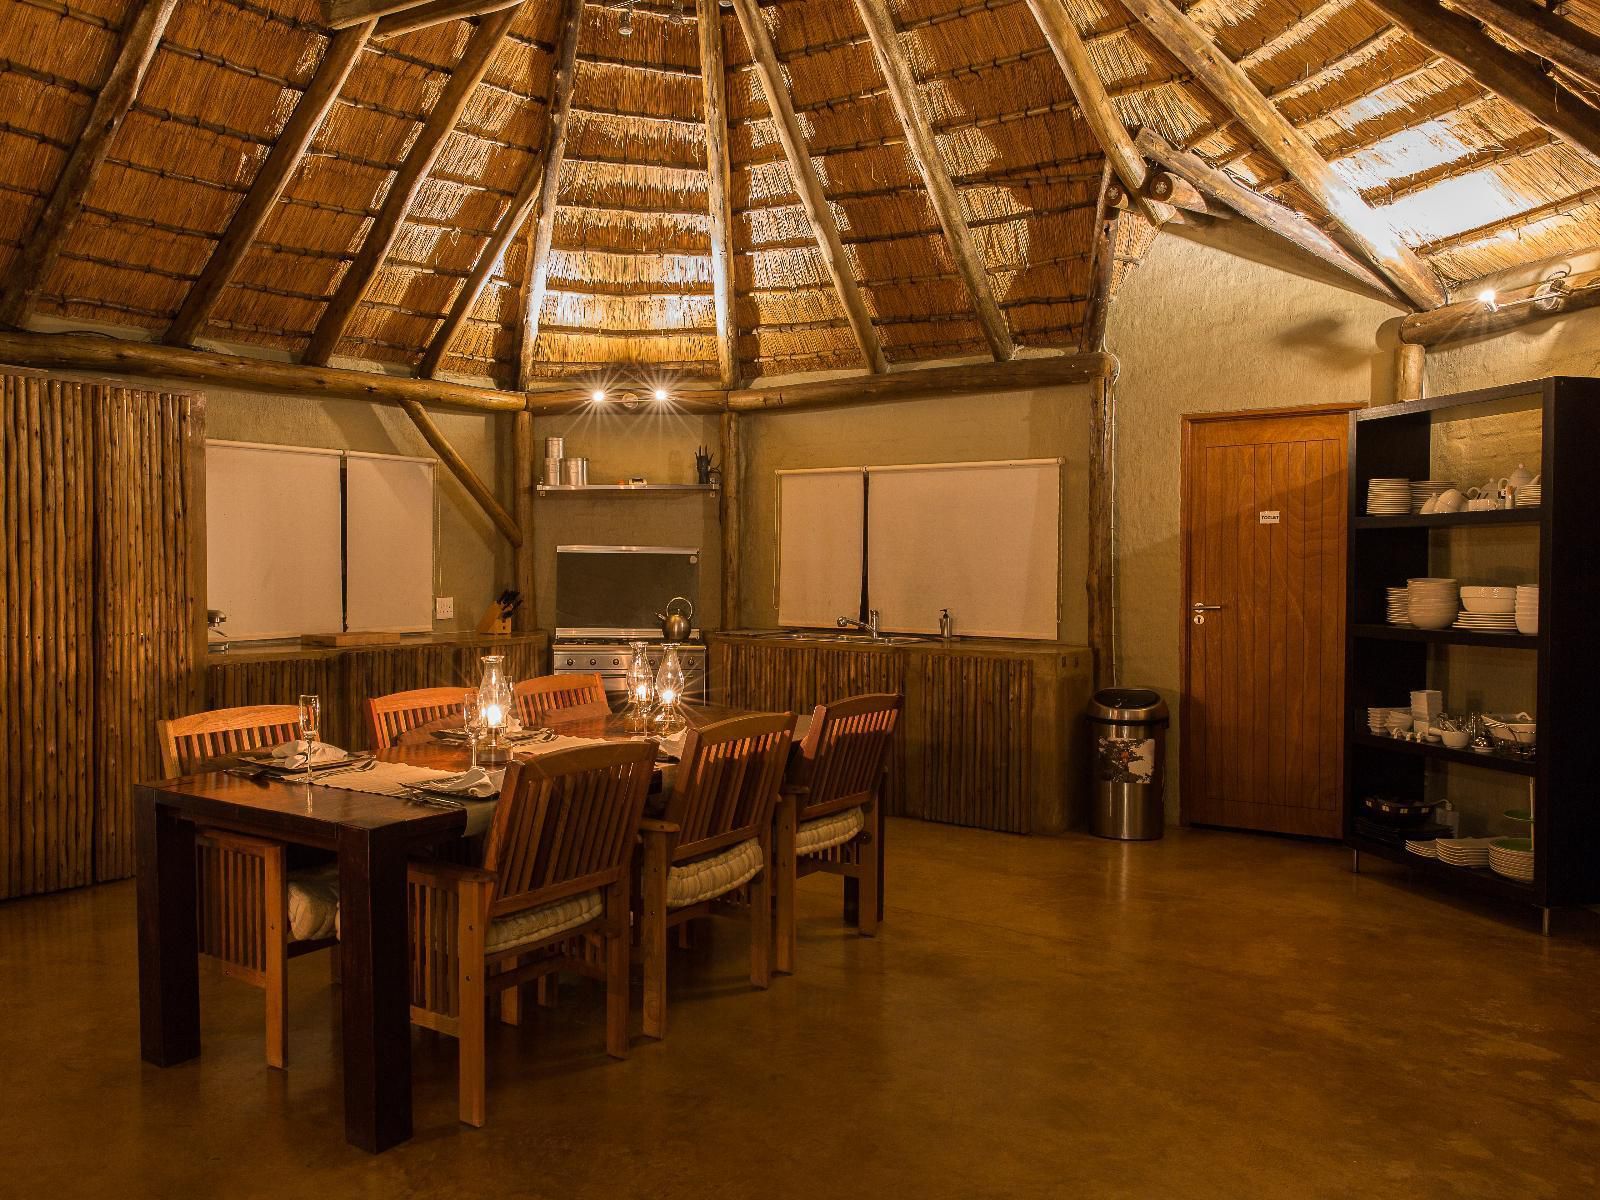 Ama Amanzi Bush Lodge Vaalwater Limpopo Province South Africa Colorful, Bar